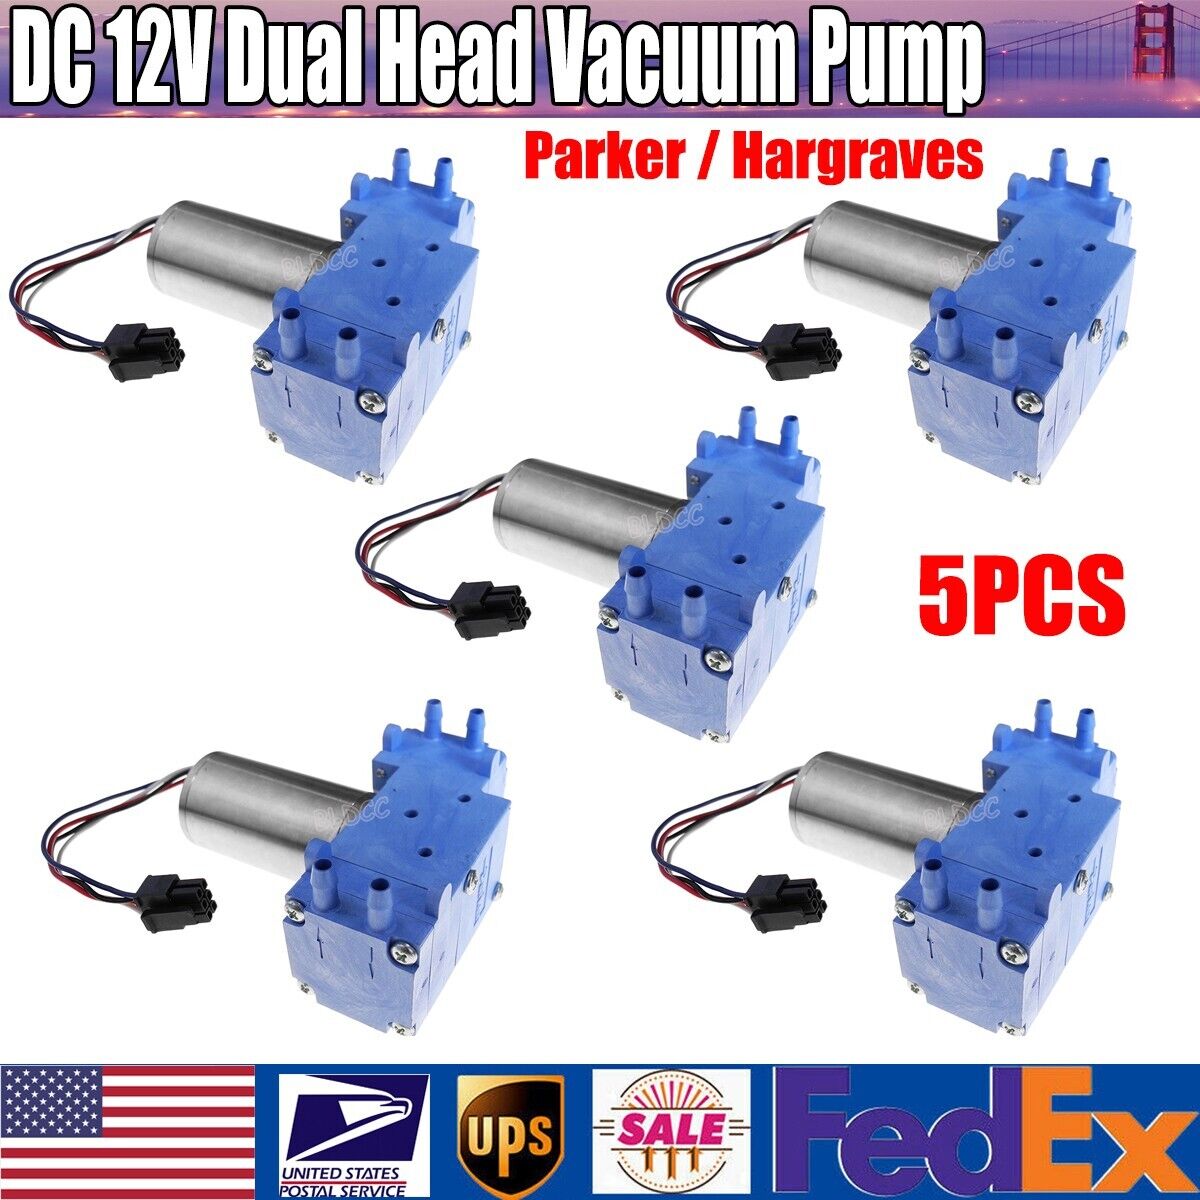 5PCS Parker / Hargraves DC12V Dual Head Brushless Air Pump Vacuum Diaphragm Pump